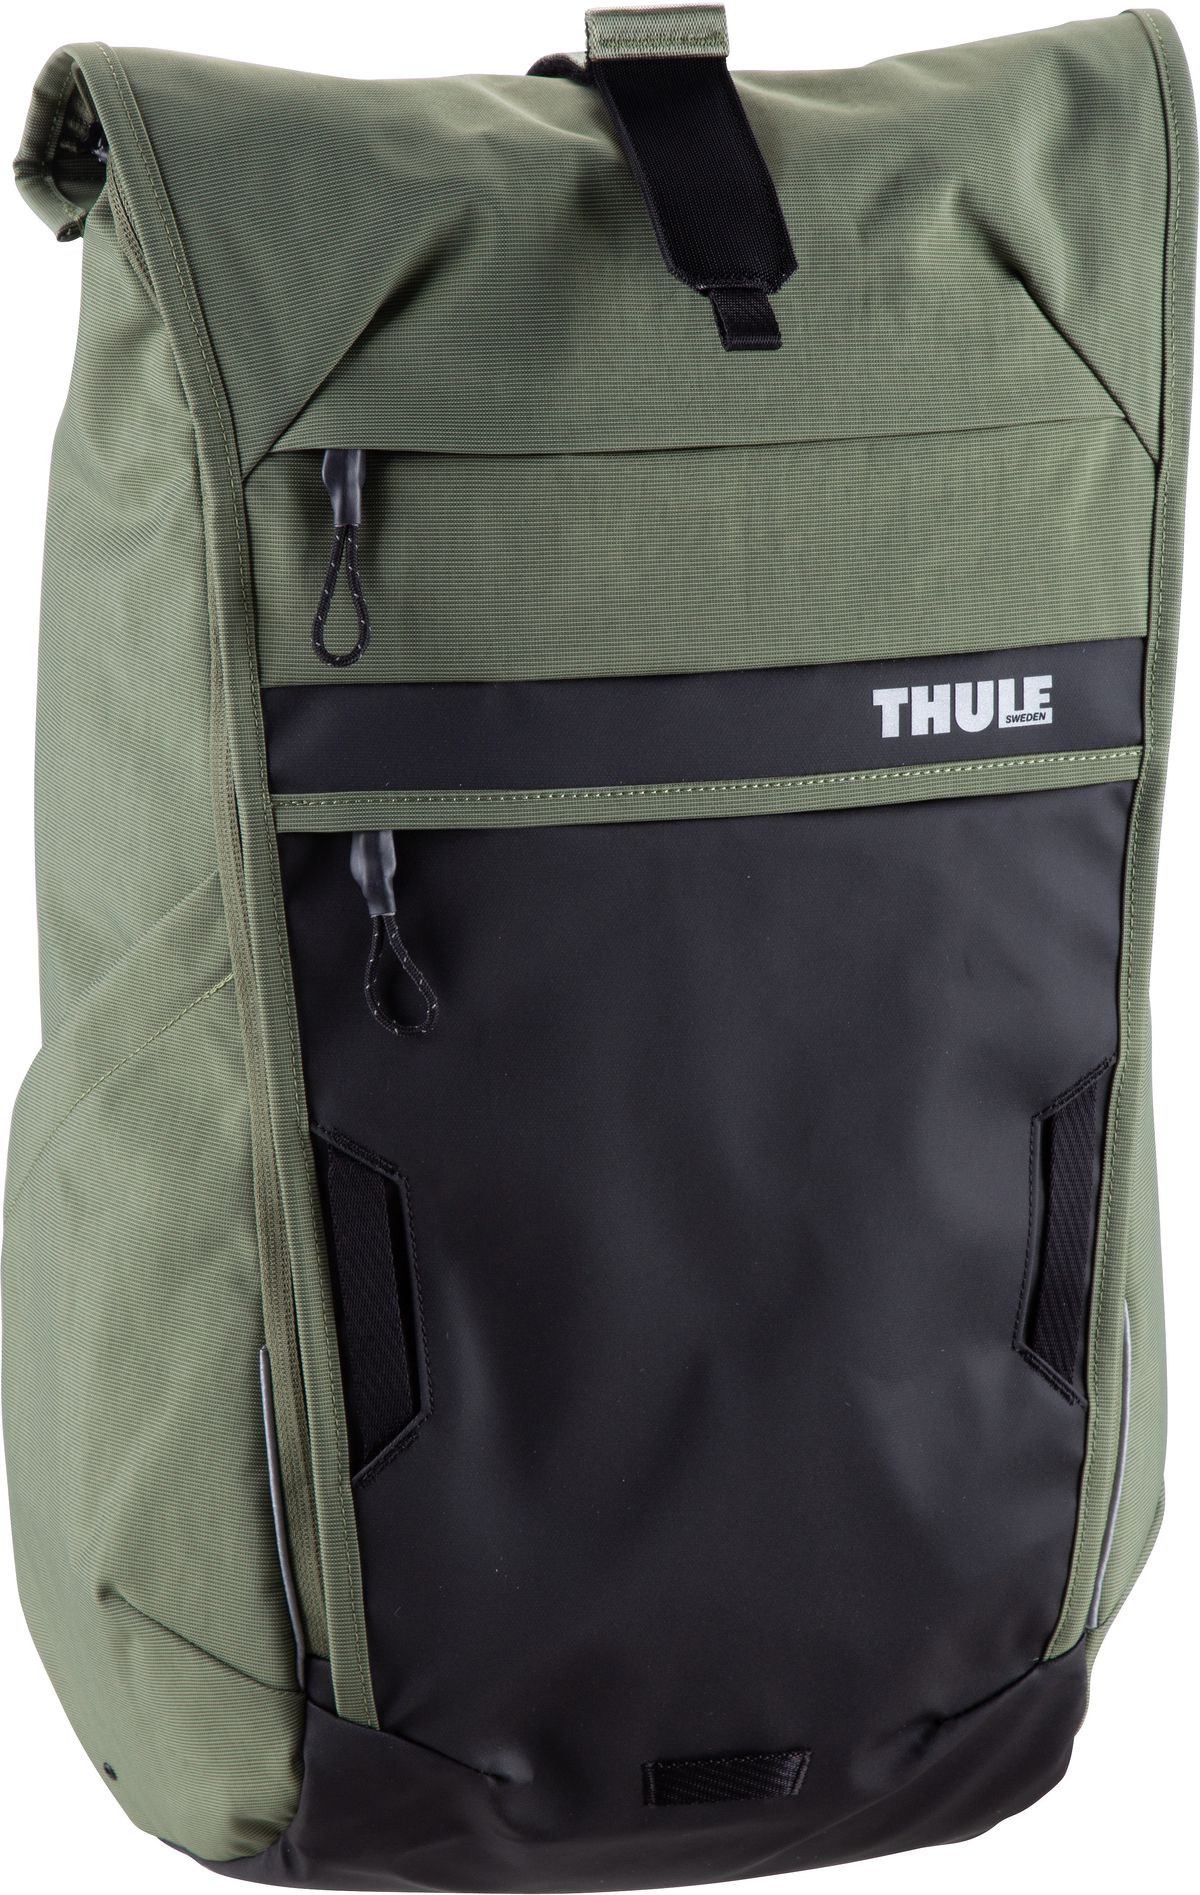 Thule Paramount Commuter Backpack 18L  in Oliv (18 Liter), Rucksack / Backpack